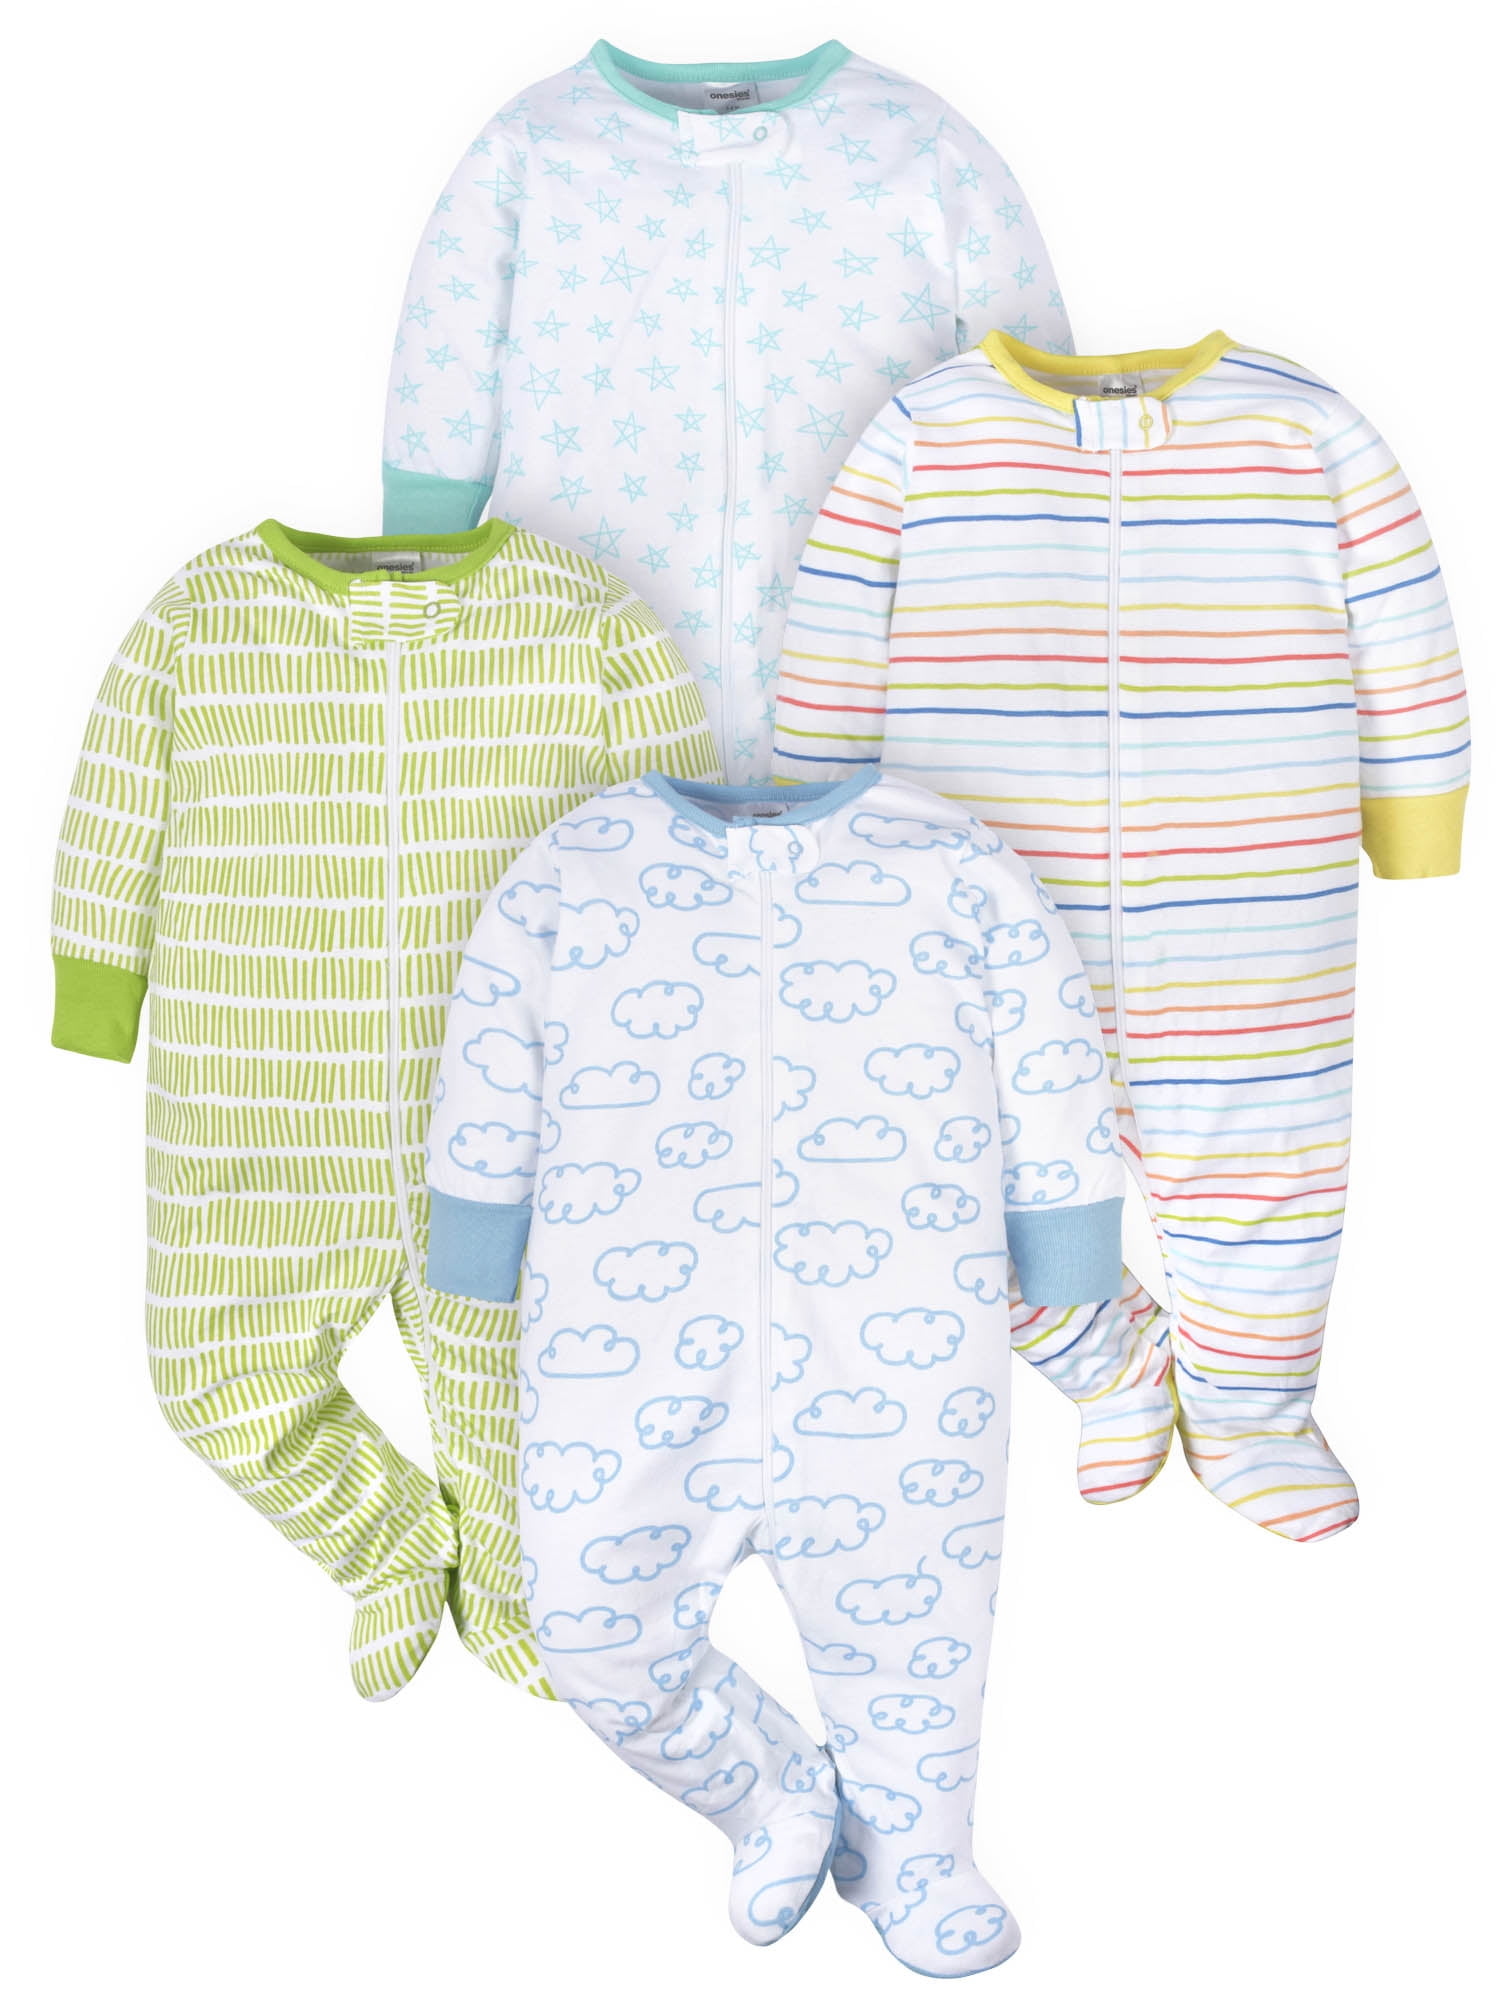 Baby Boy All-in-One Sleepsuit Babygrow Romper 100% Cotton 0-9 Months 